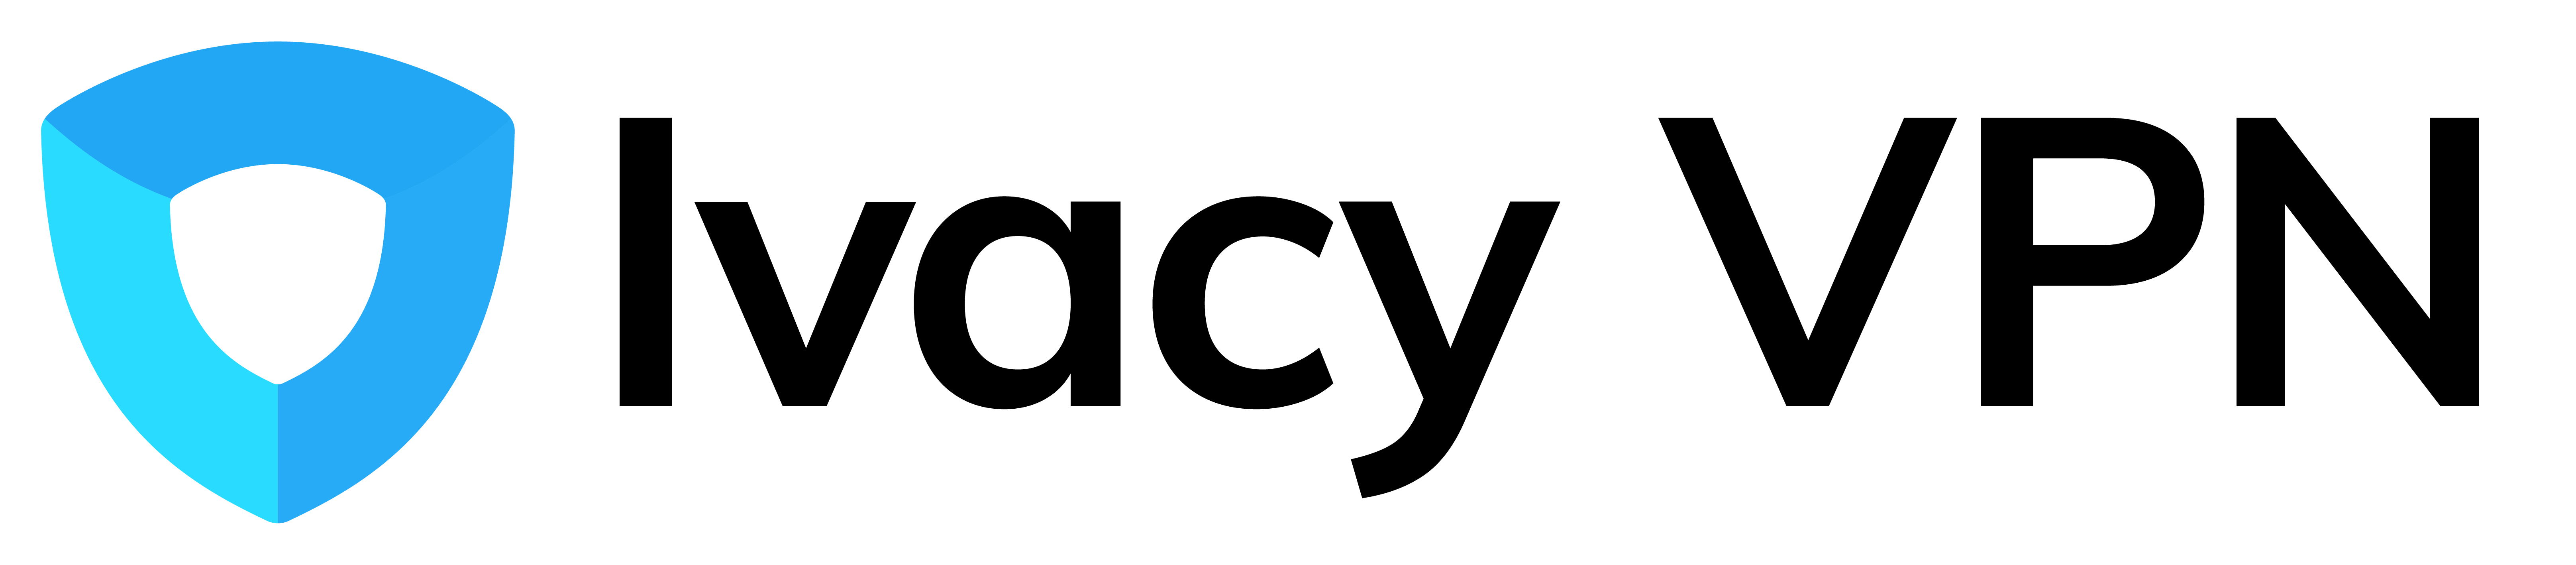 ivacy-logo 2-01